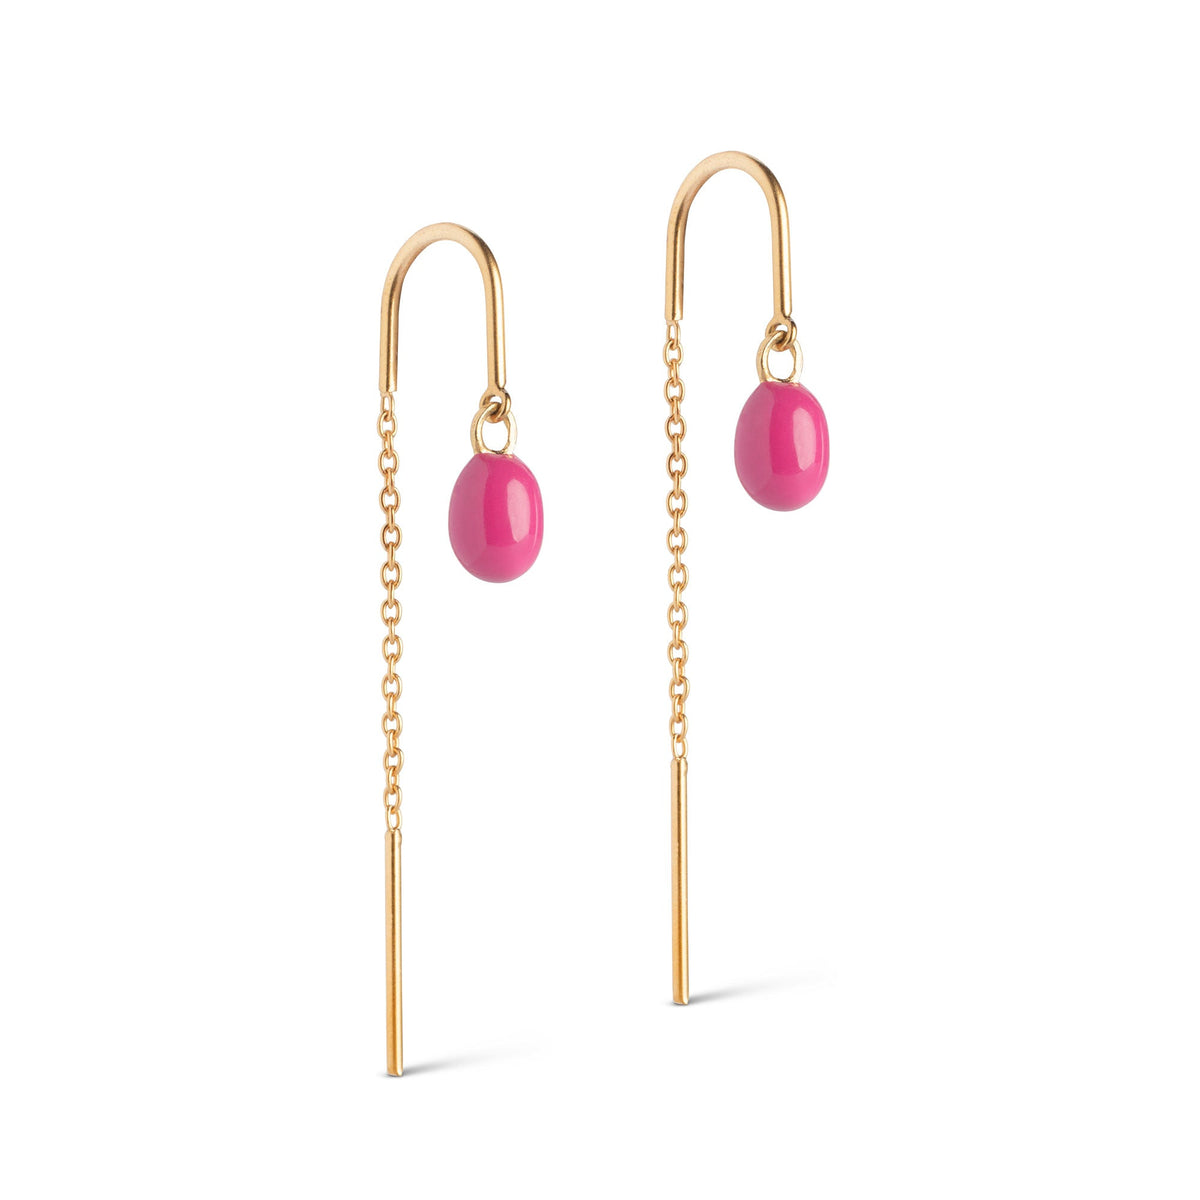 Eleanor Earrings - Fuchsia Pink